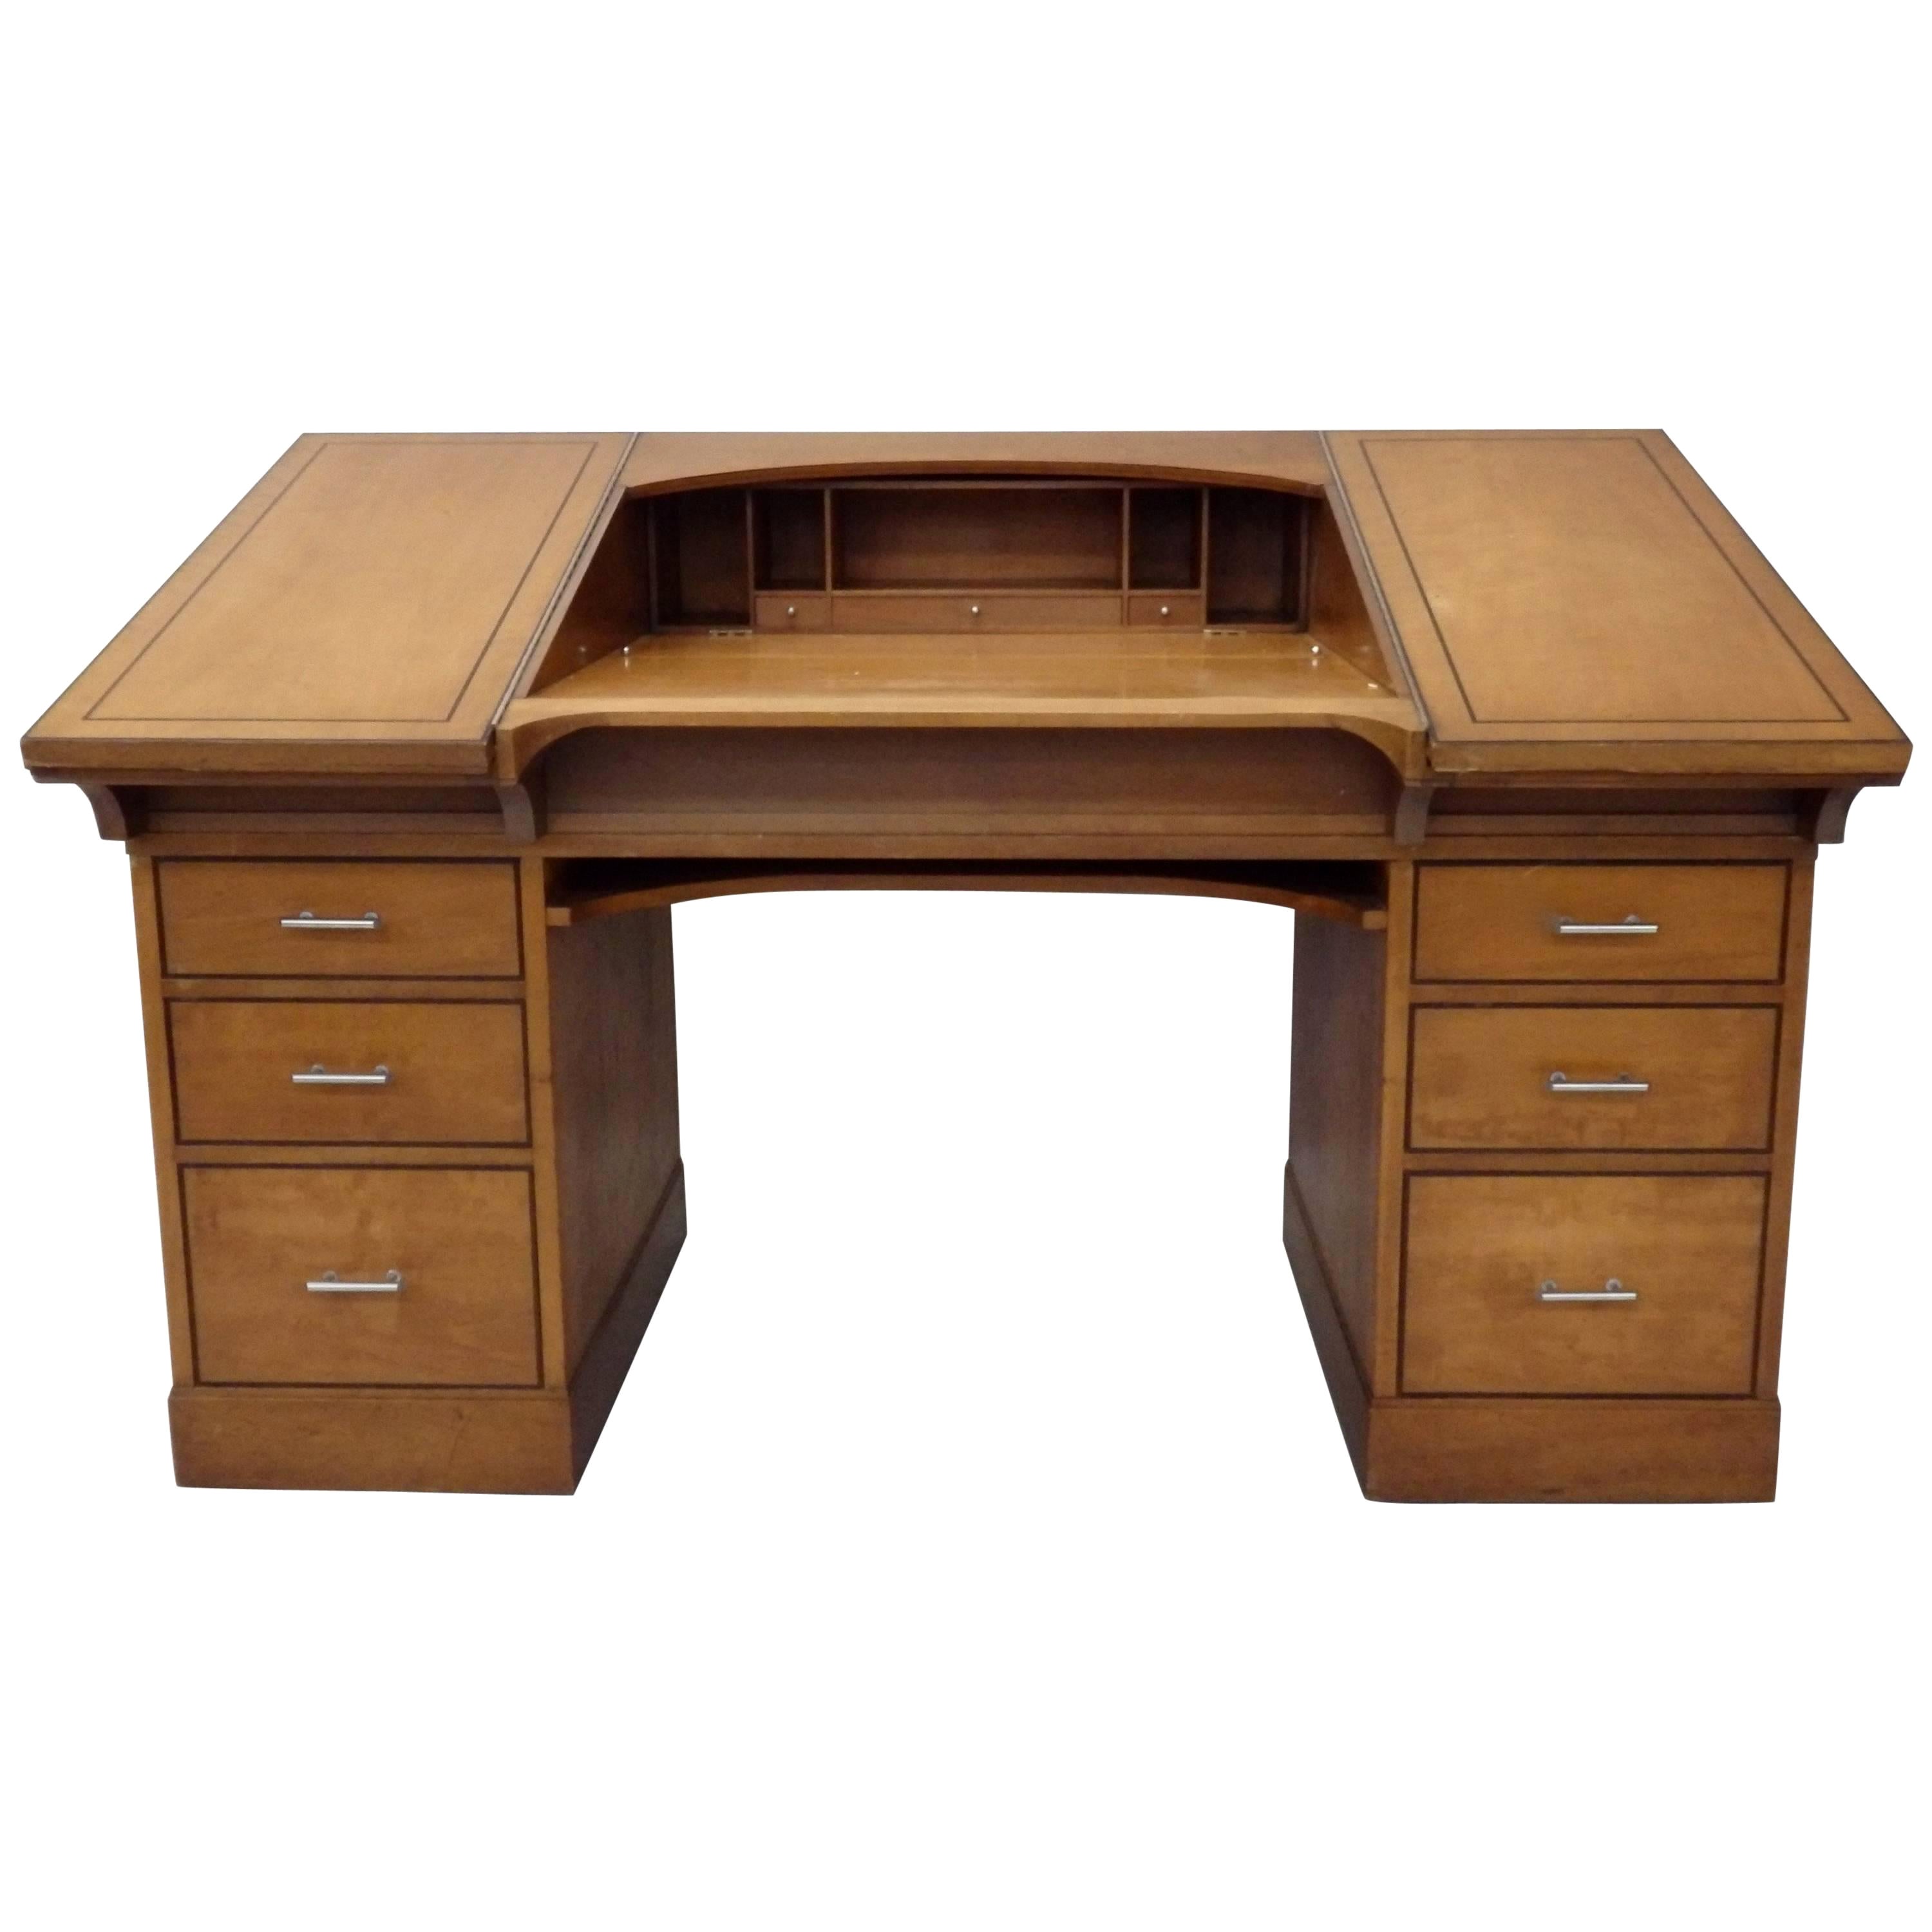 Johann Tapp Custom Built Art Deco era Cartoonist Desk with Hidden Compartments